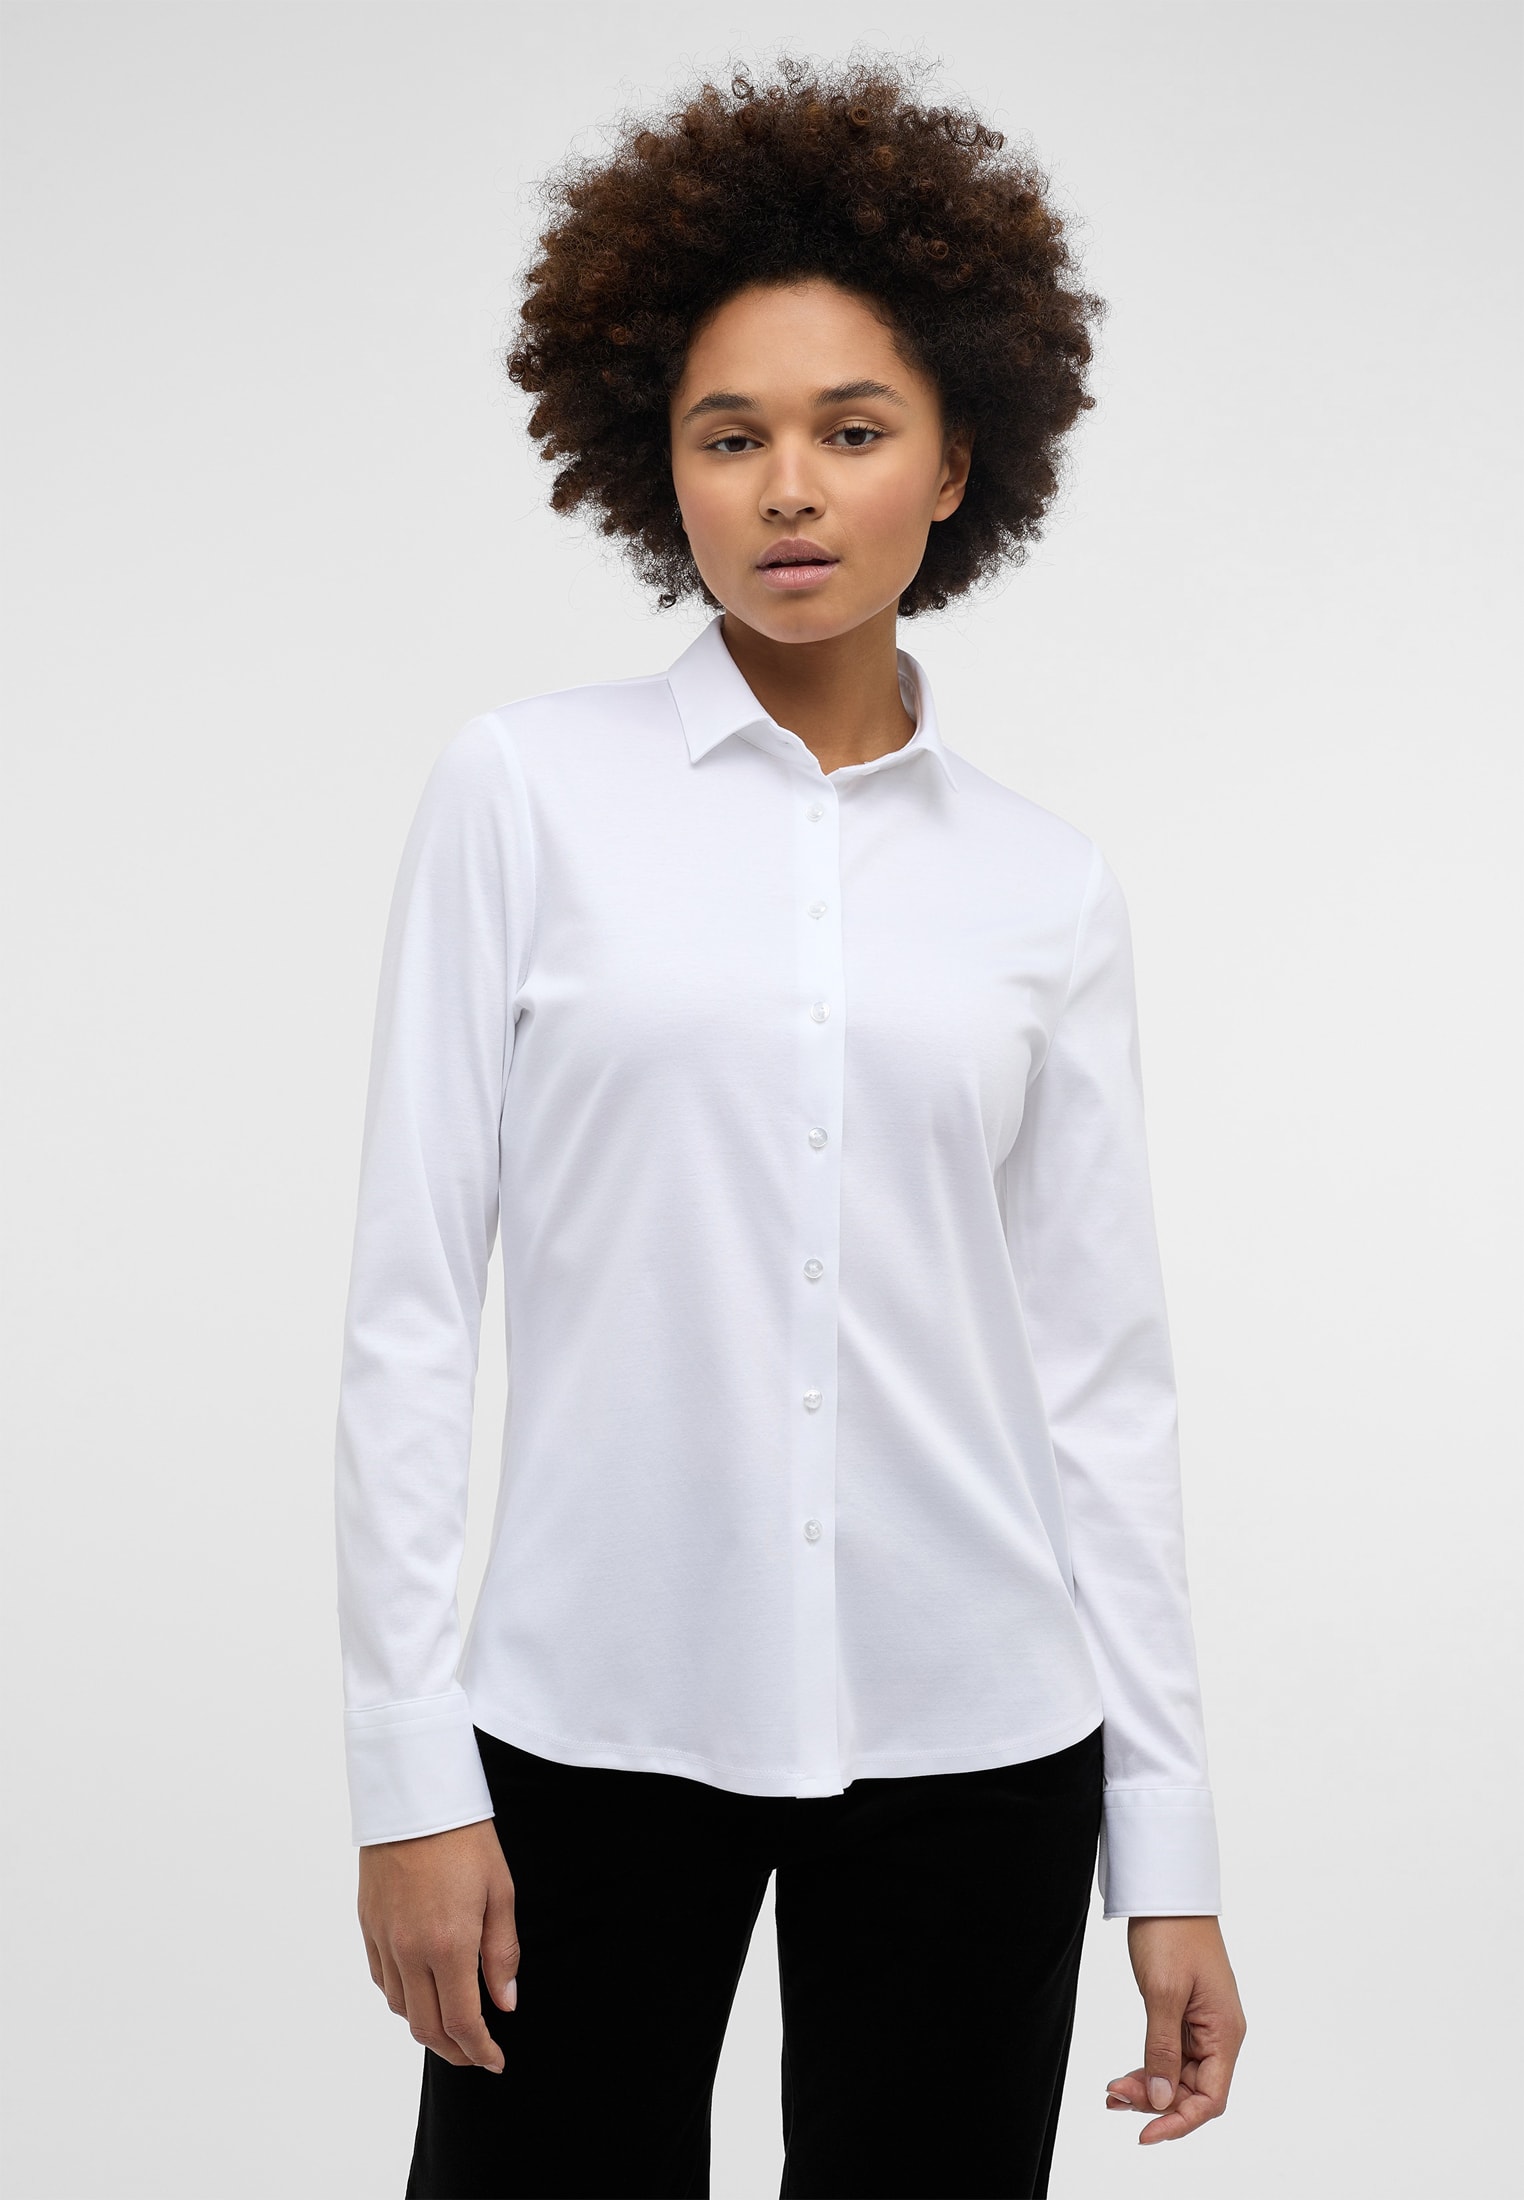 Jersey Shirt Blouse in white | white | long plain | sleeve | 2BL00229-00-01-42-1/1 42